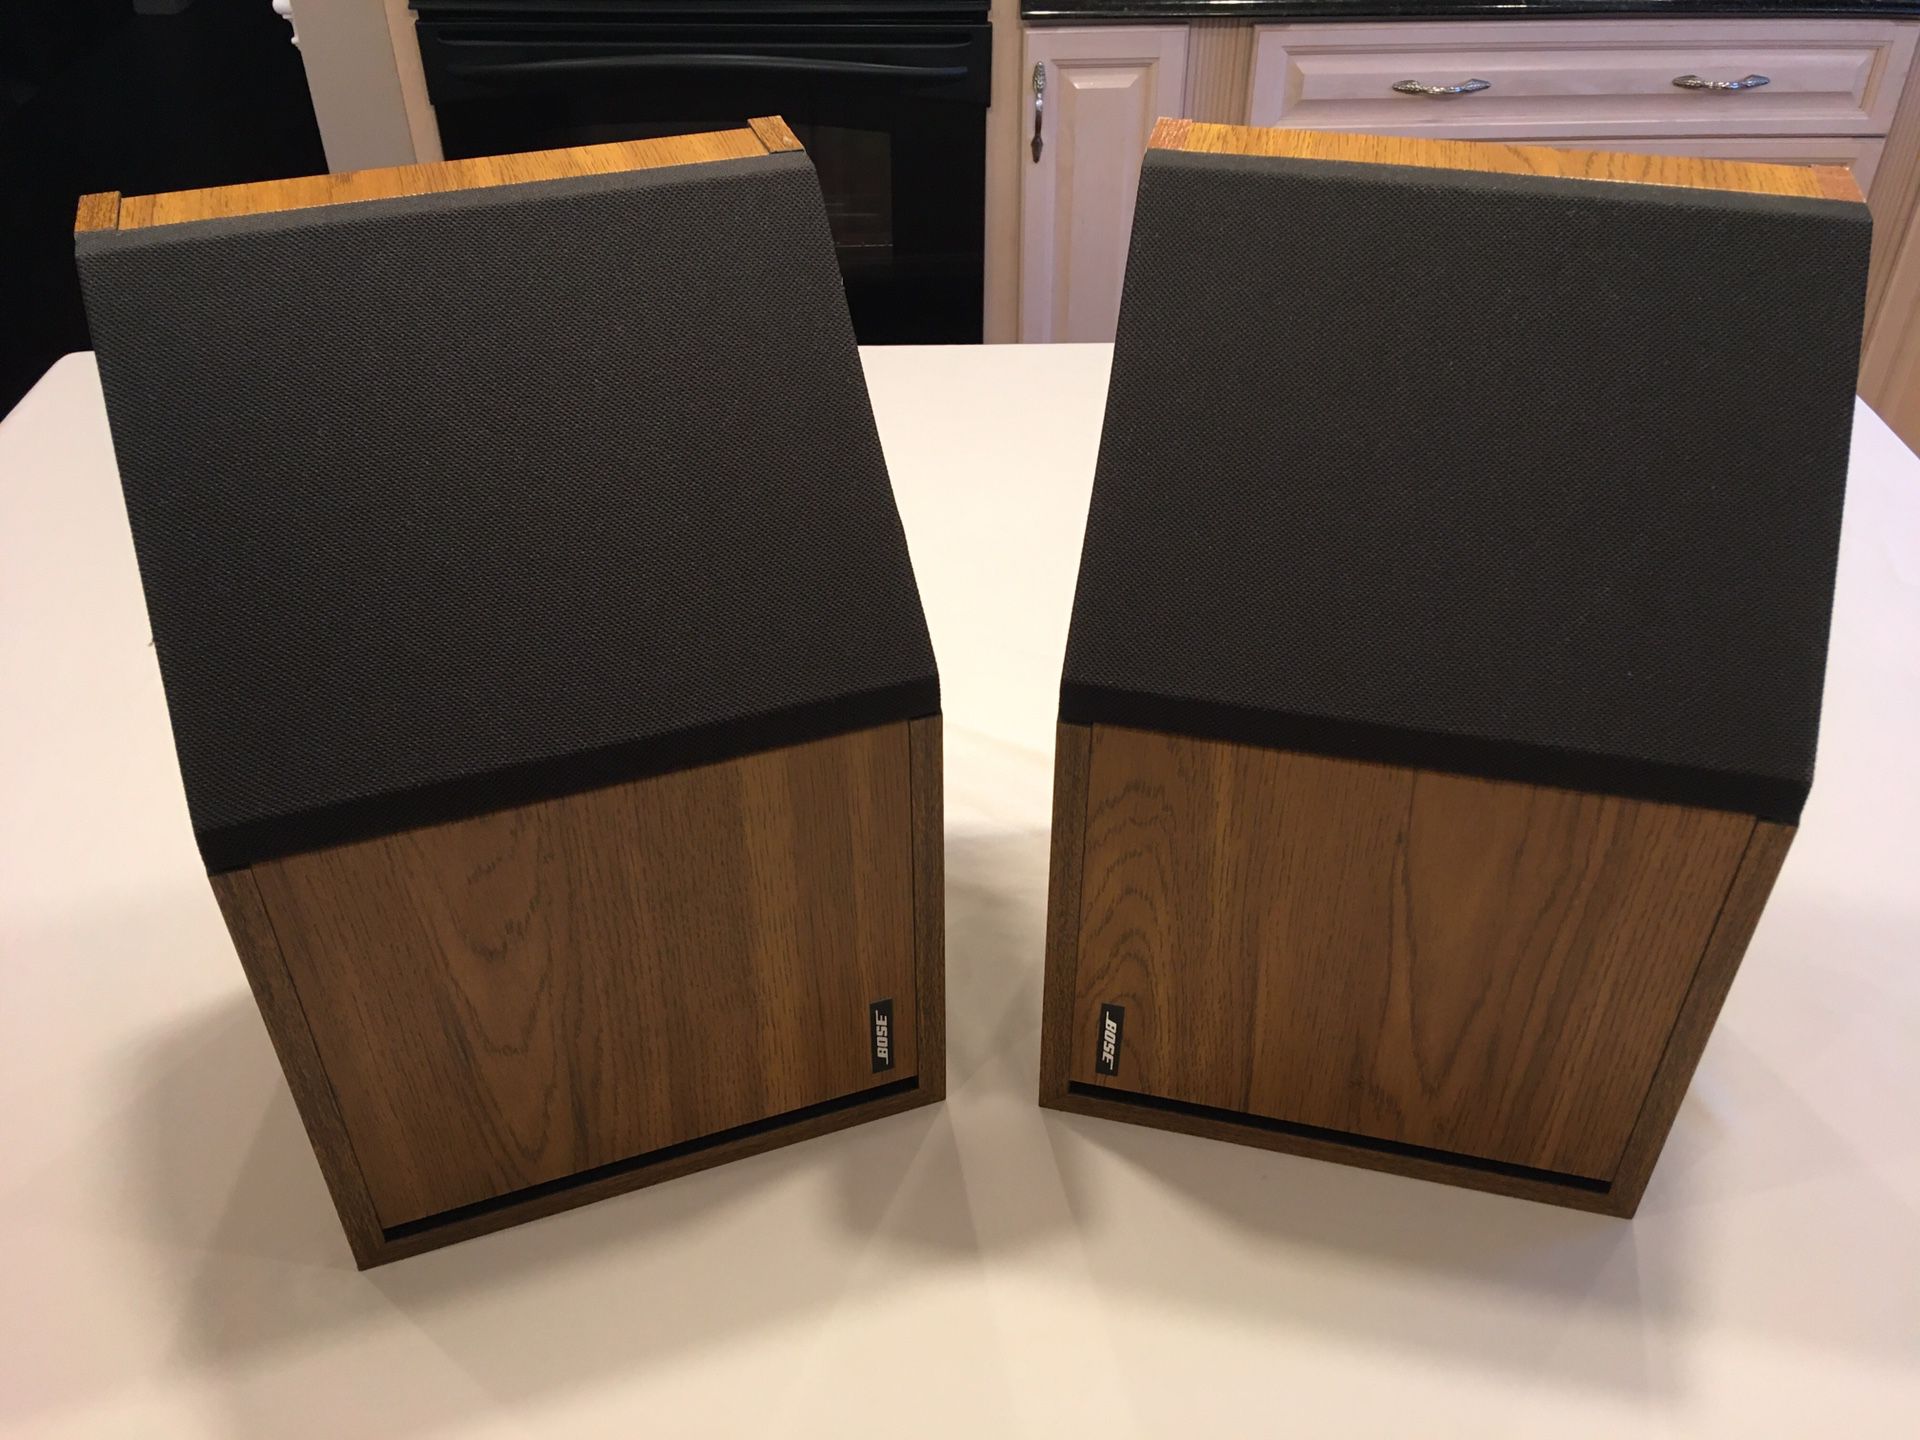 Bose 2.2 Direct Reflecting Bookshelf Speakers